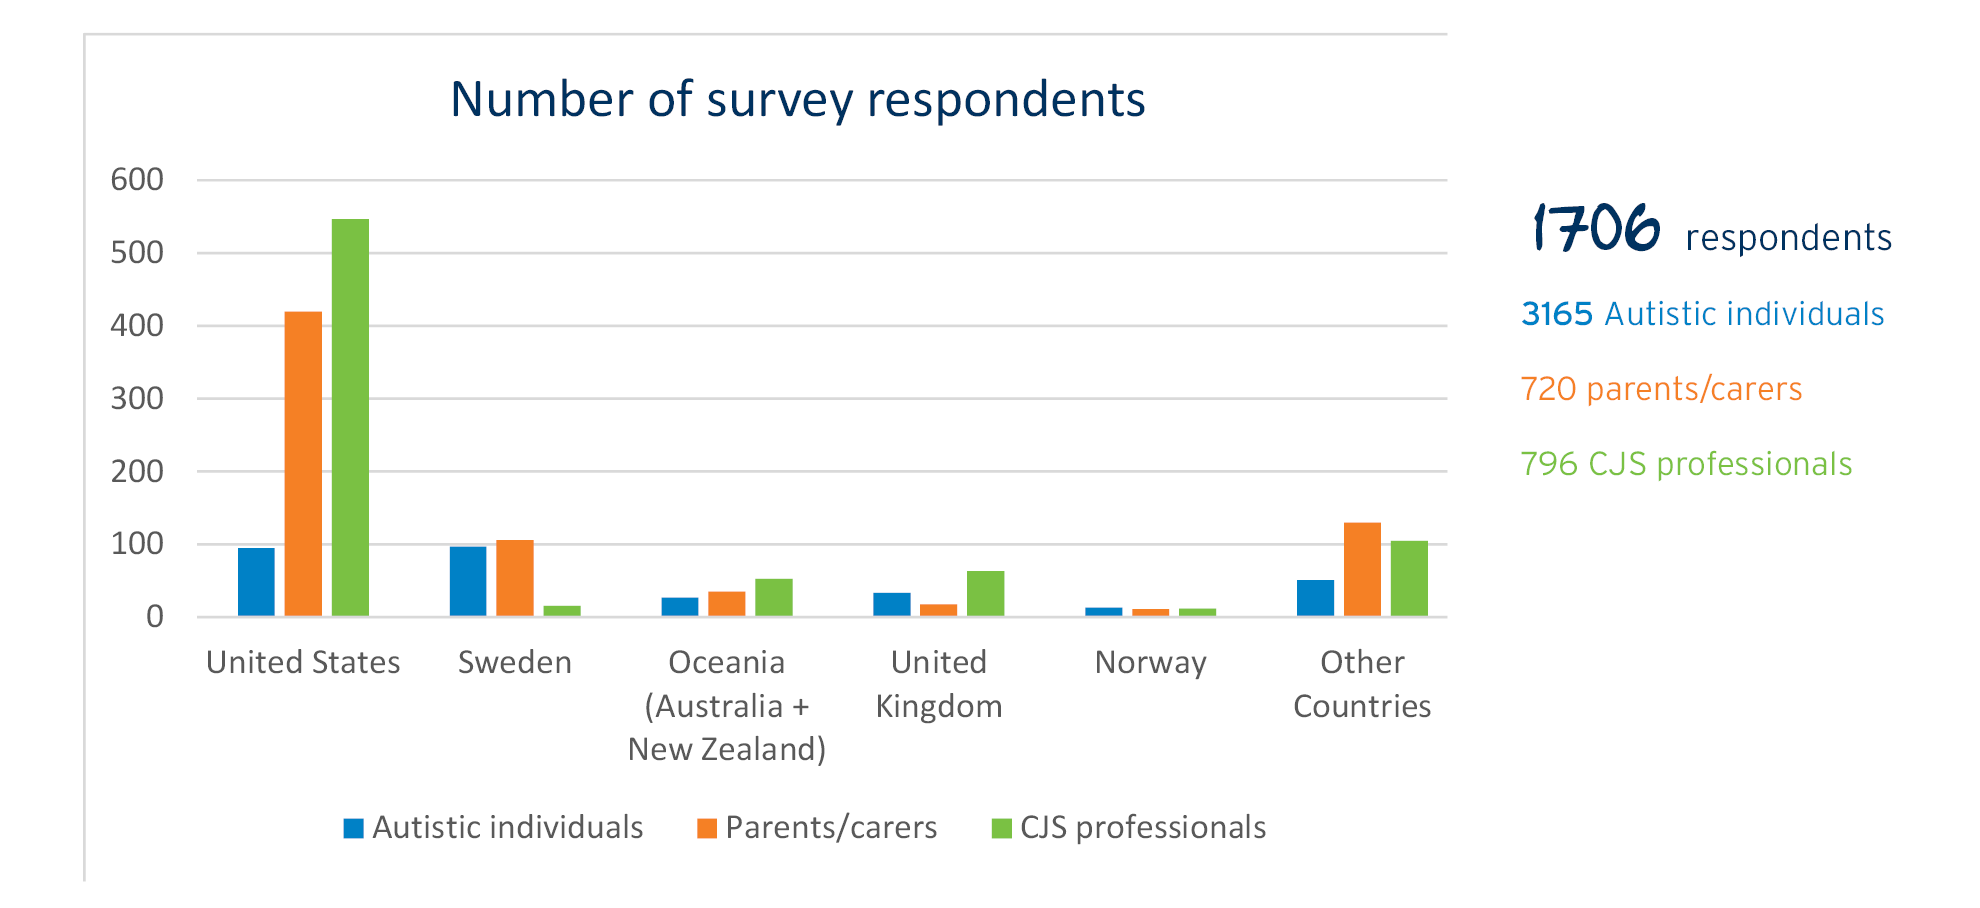 International CJS survey respondents